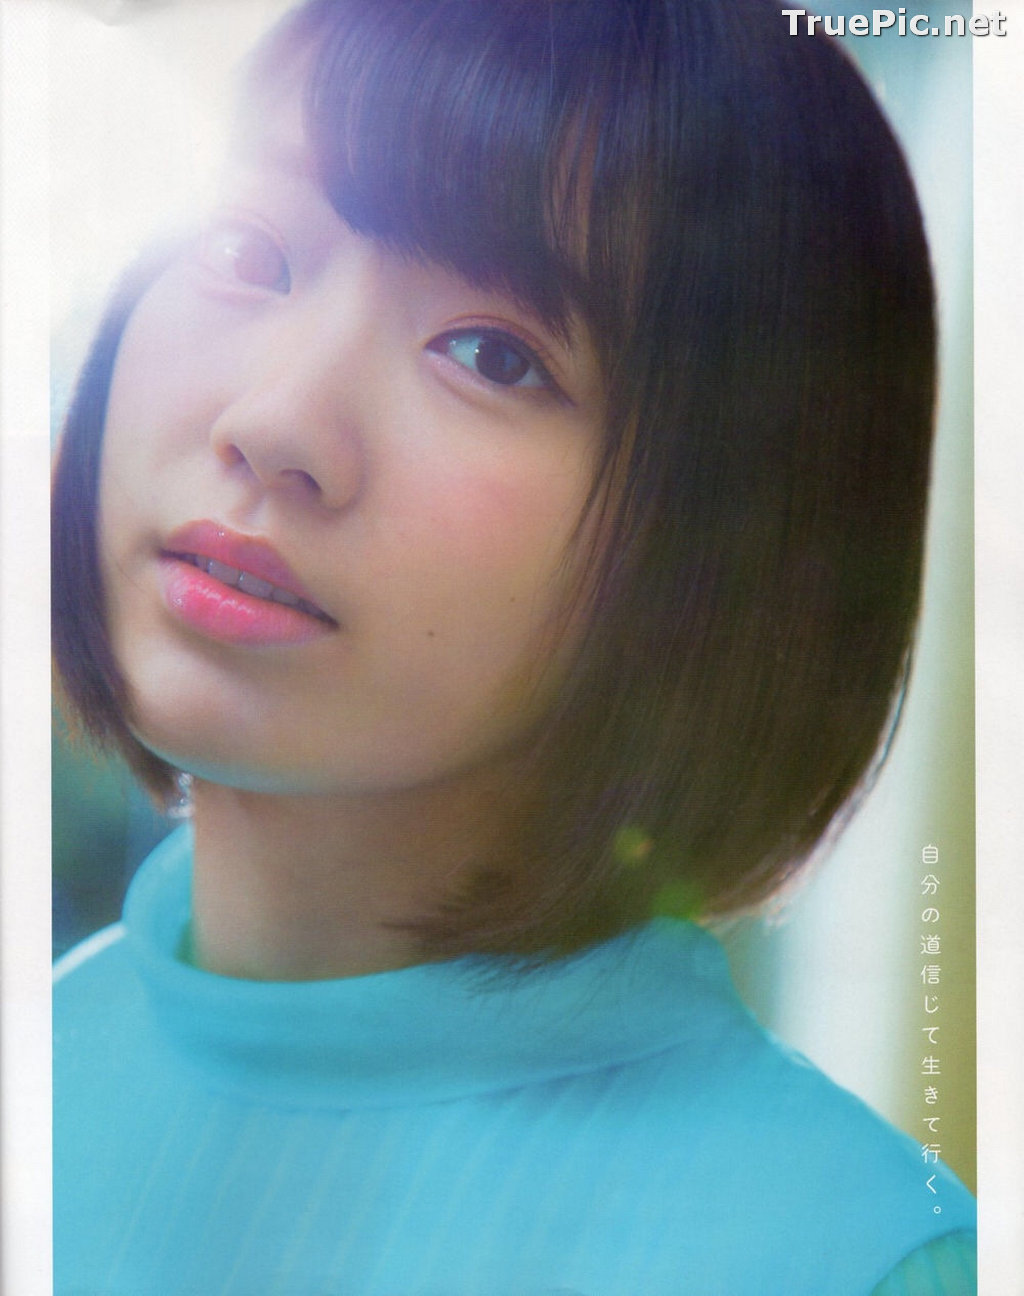 Image Japanese Singer and Actress - Sakura Miyawaki (宮脇咲良) - Sexy Picture Collection 2021 - TruePic.net - Picture-61